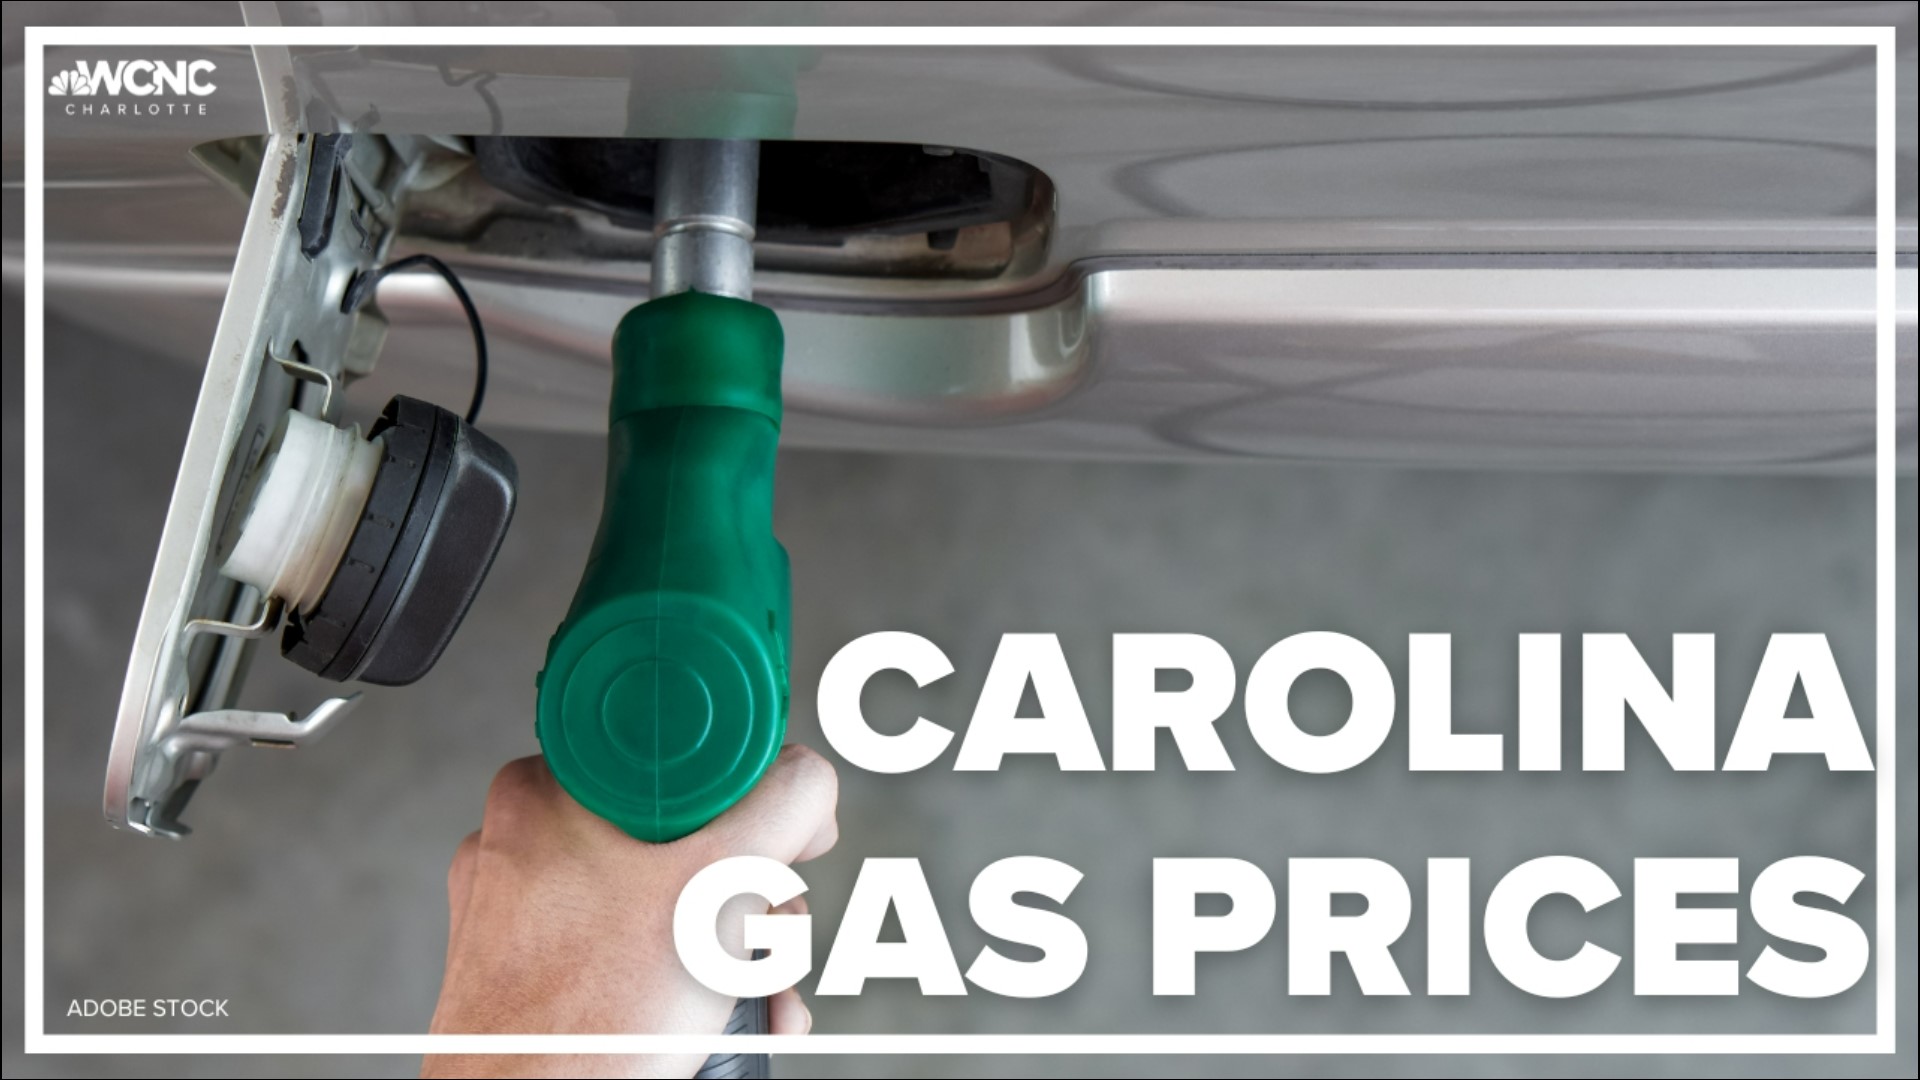 North Carolina drivers are paying $3.24 cents per gallon and South Carolina drivers are paying $3.13 per gallon.